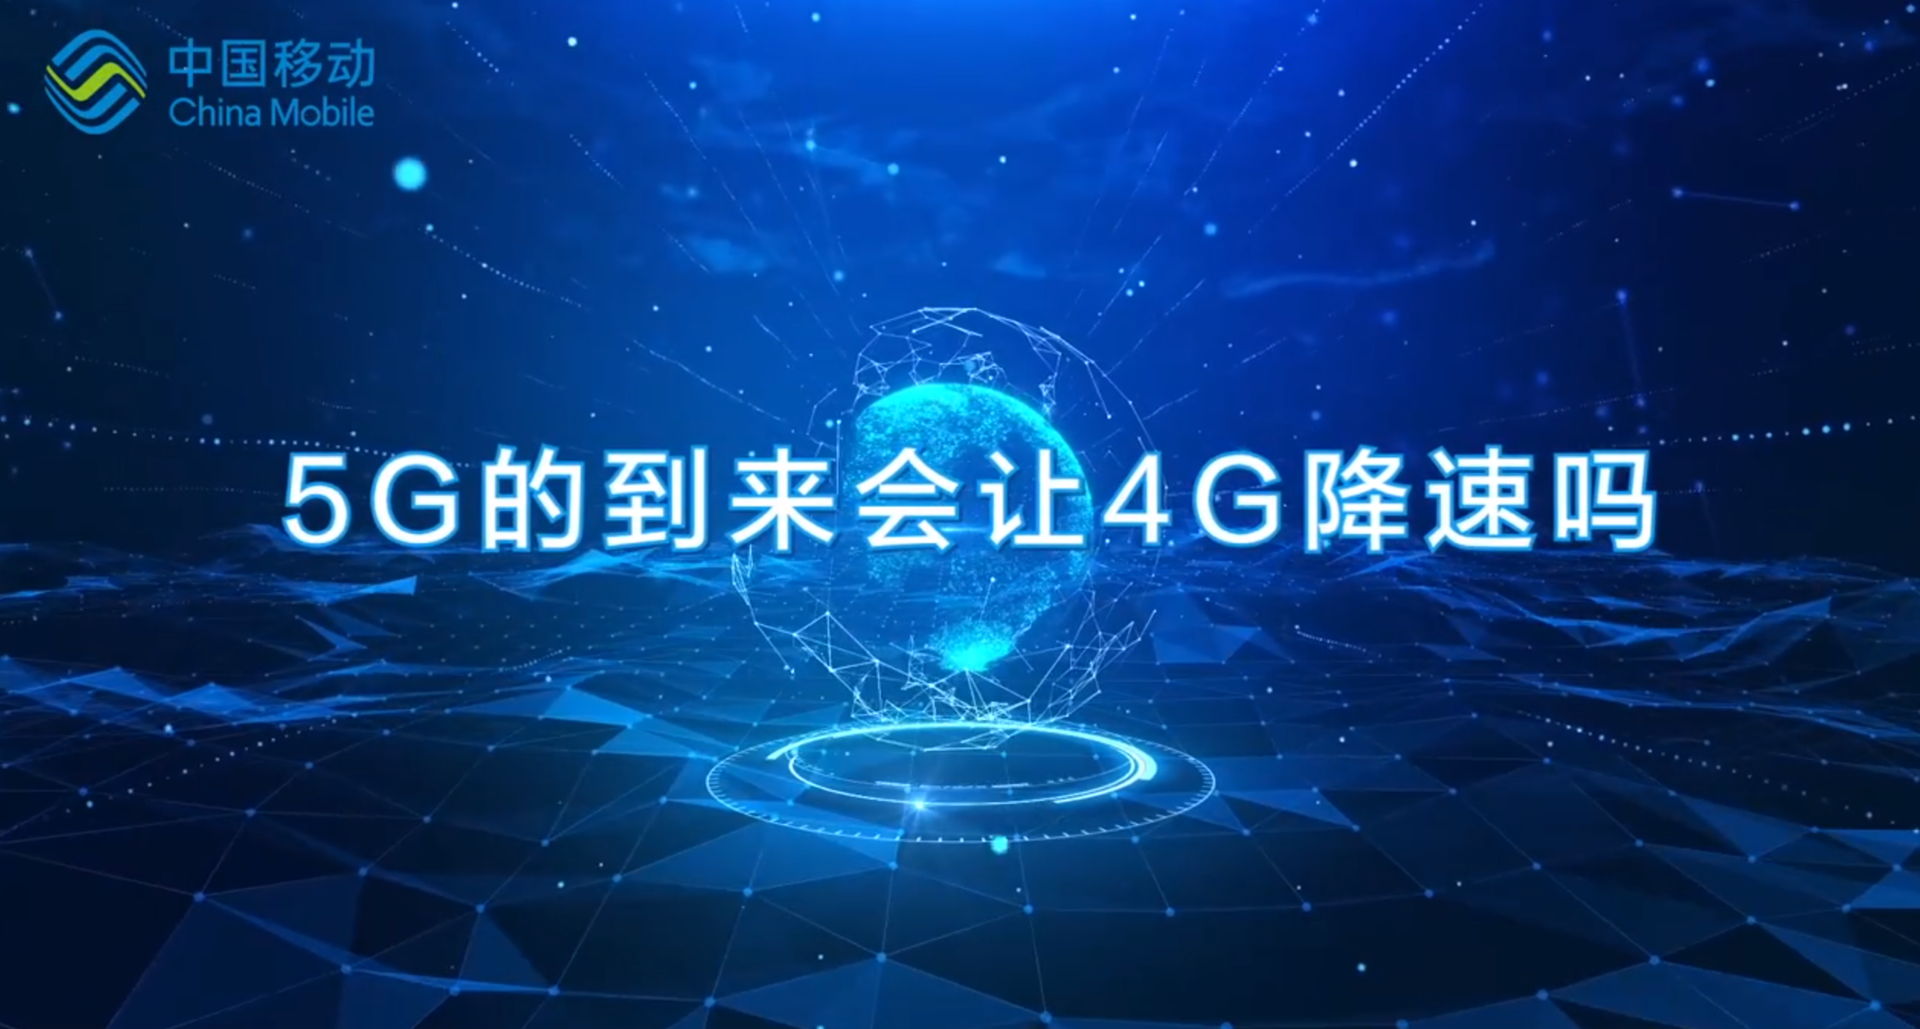 5G商用会影响4G使用吗？中国移动官方回应并不会！